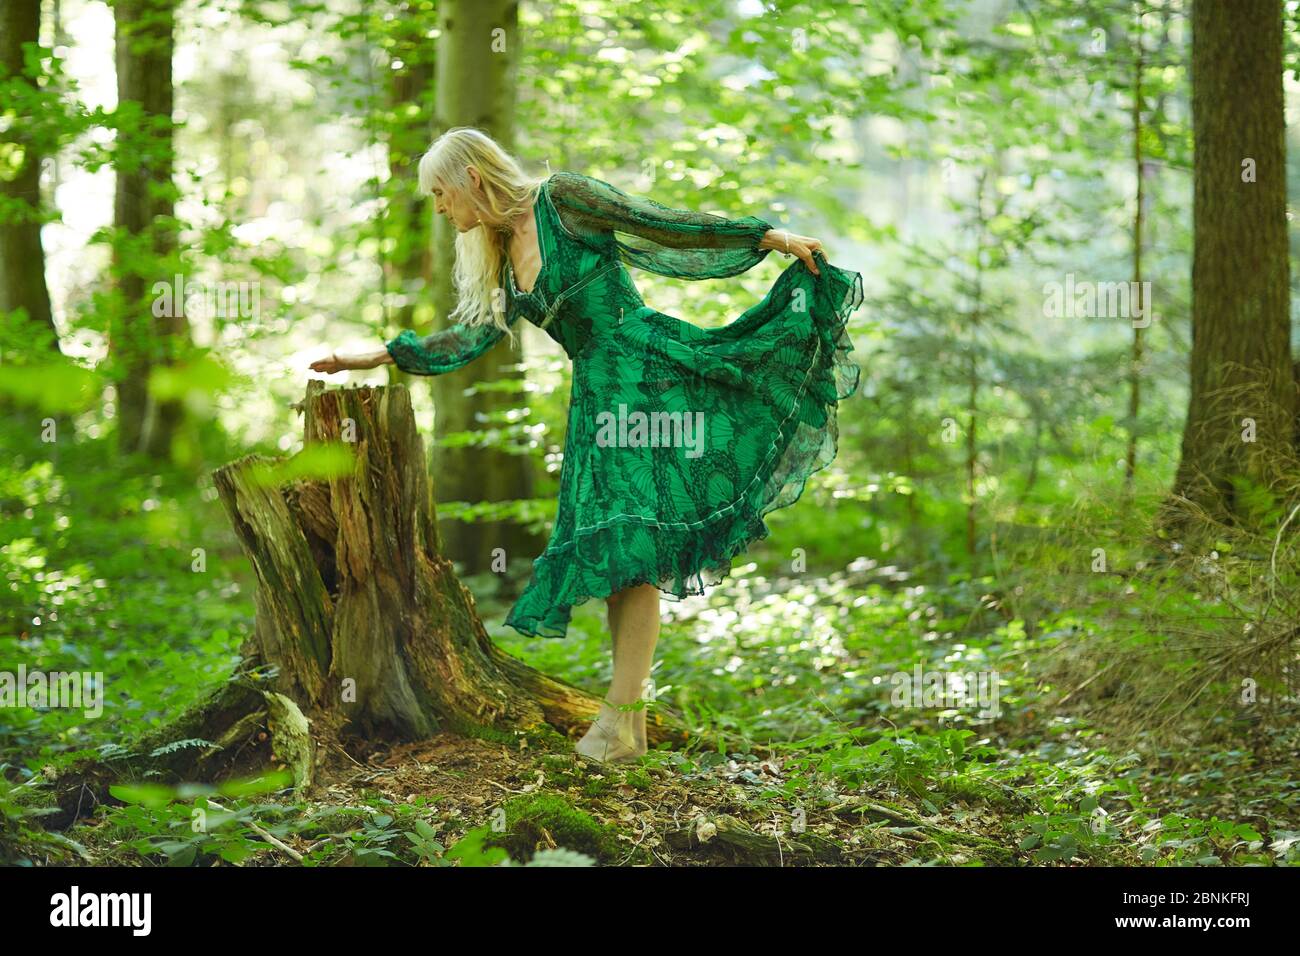 green nature dresses